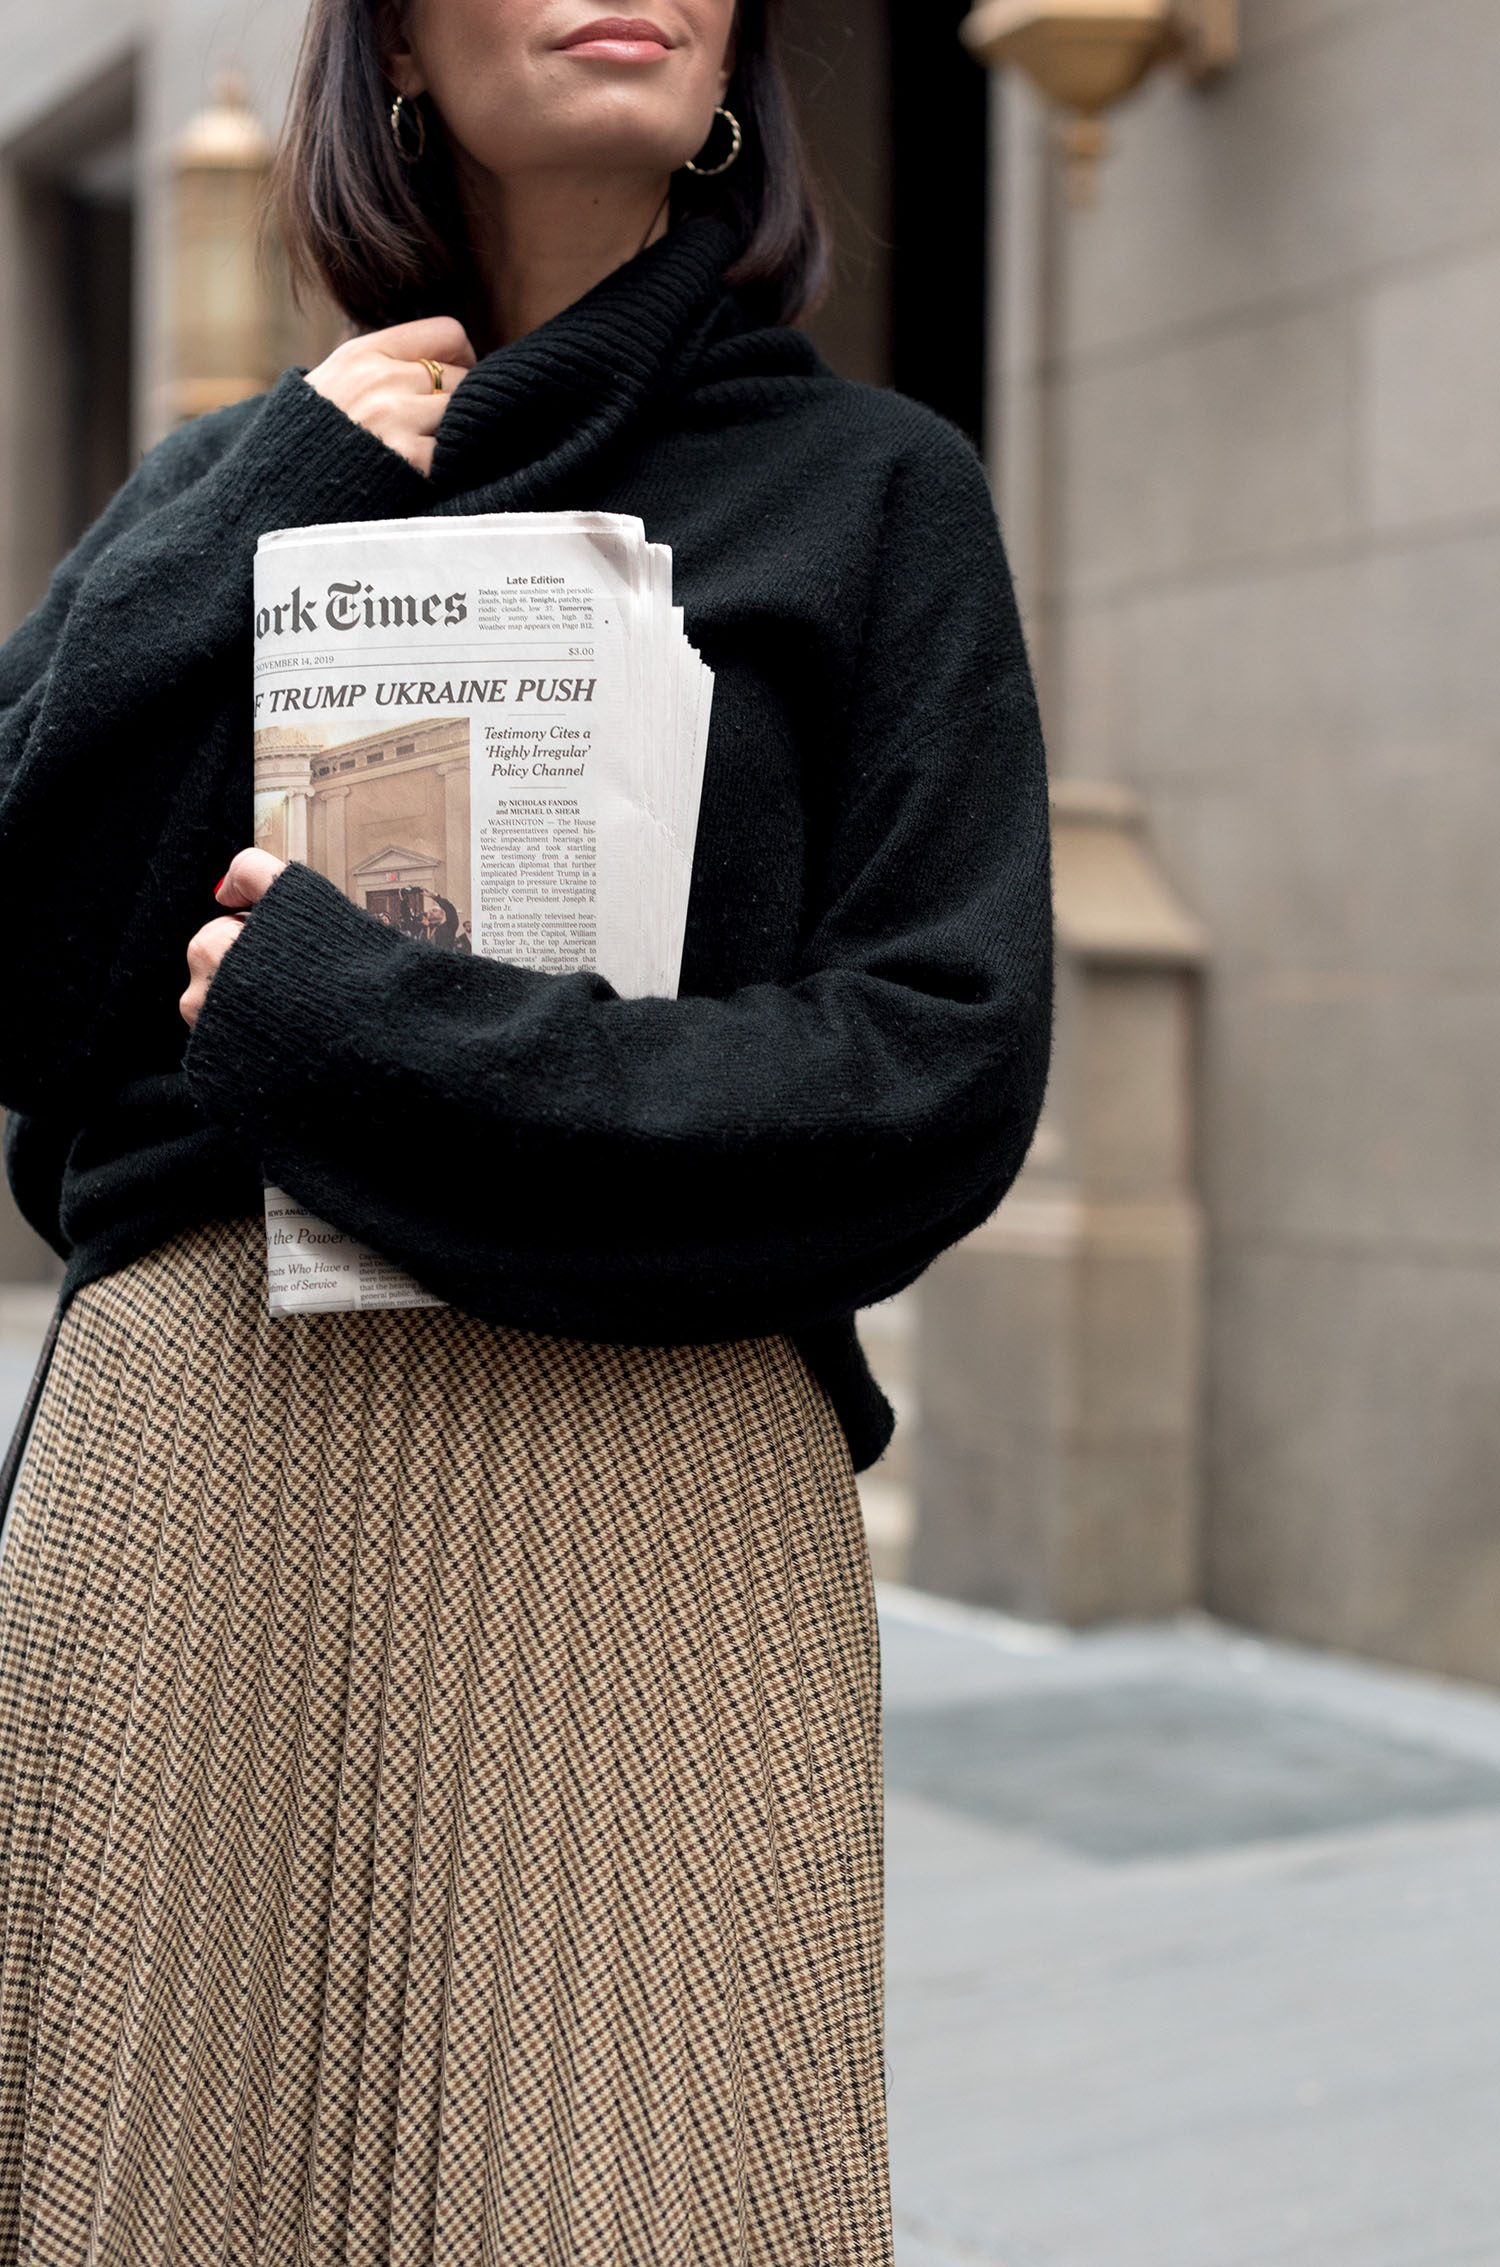 Coco & Vera - H&M sweater, Zara pleated skirt, Urban Outfitters hoop earrings